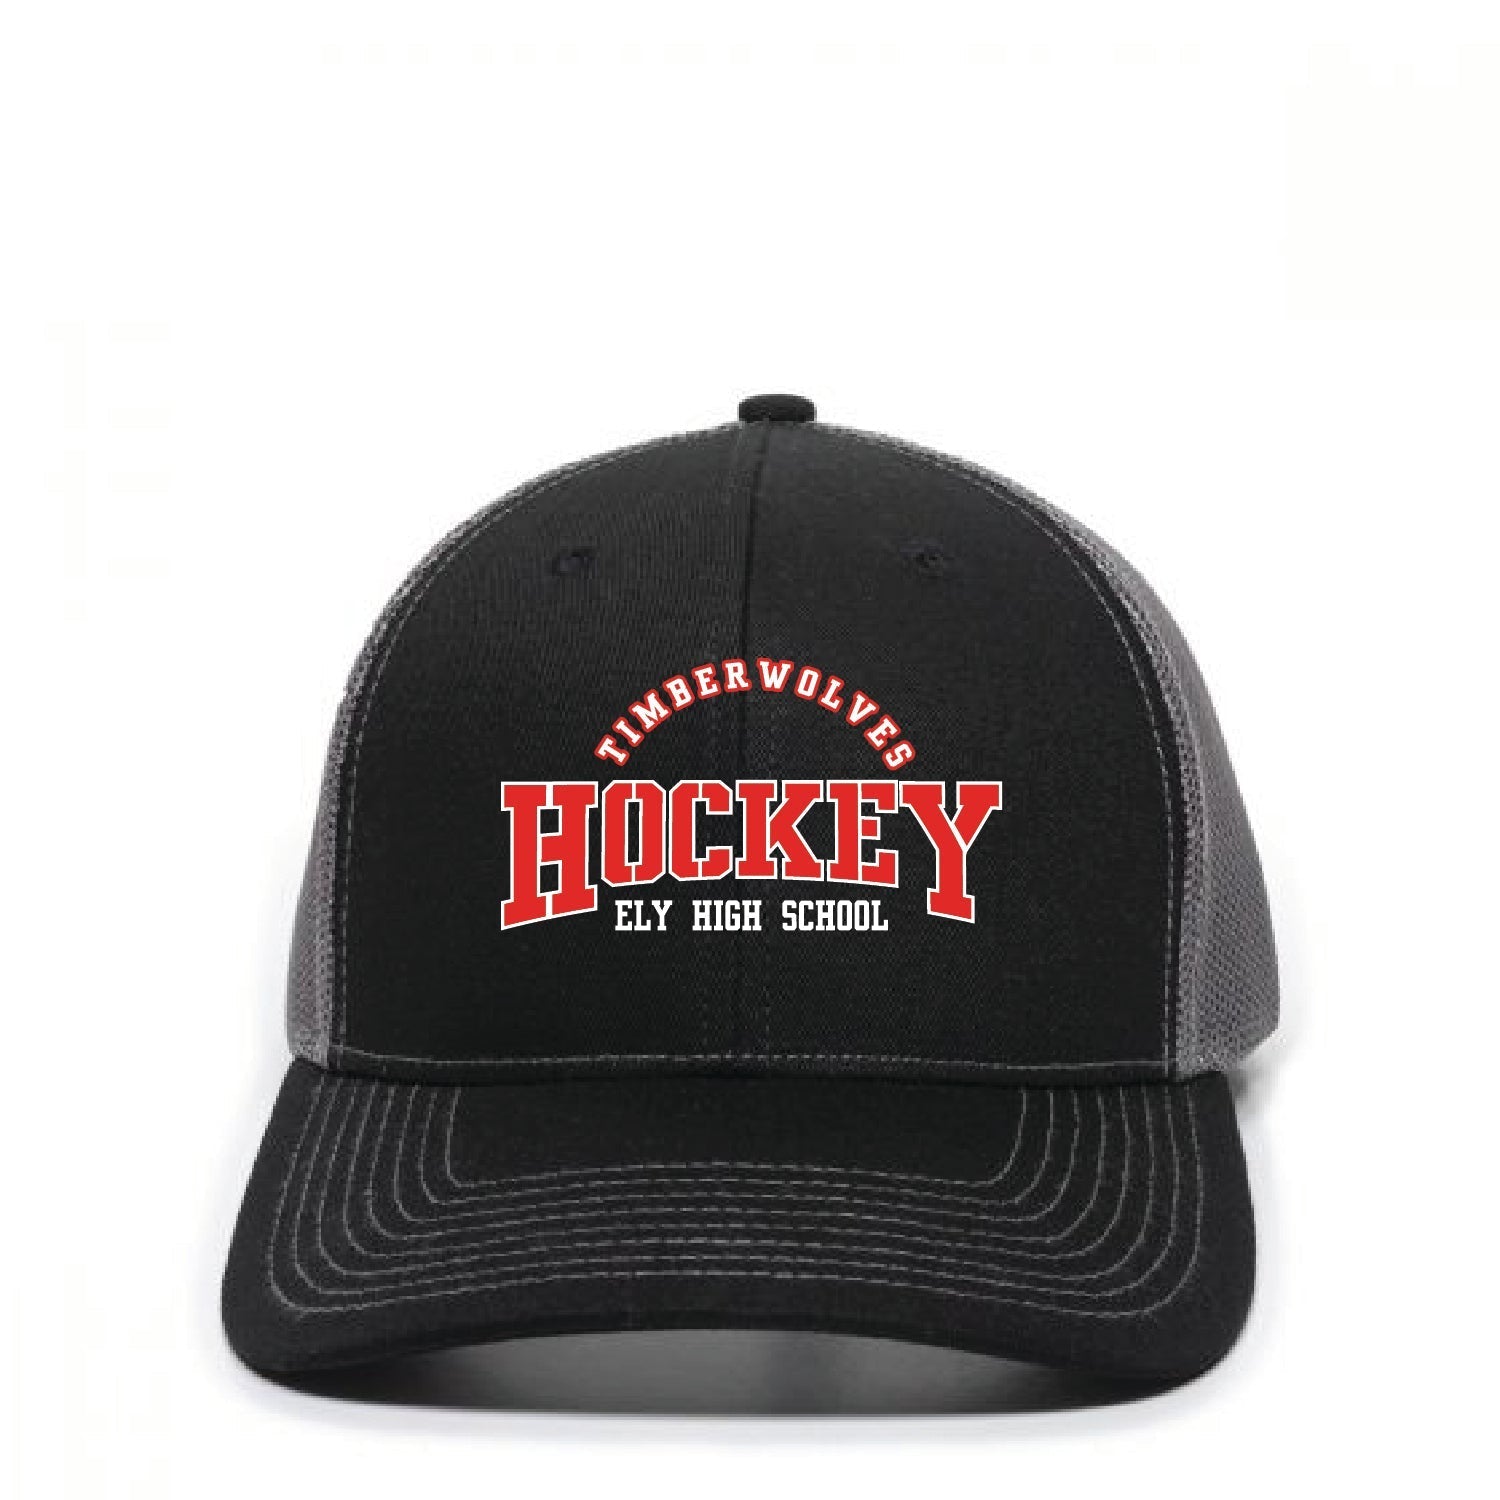 Ely Hockey Trucker Hat - DSP On Demand